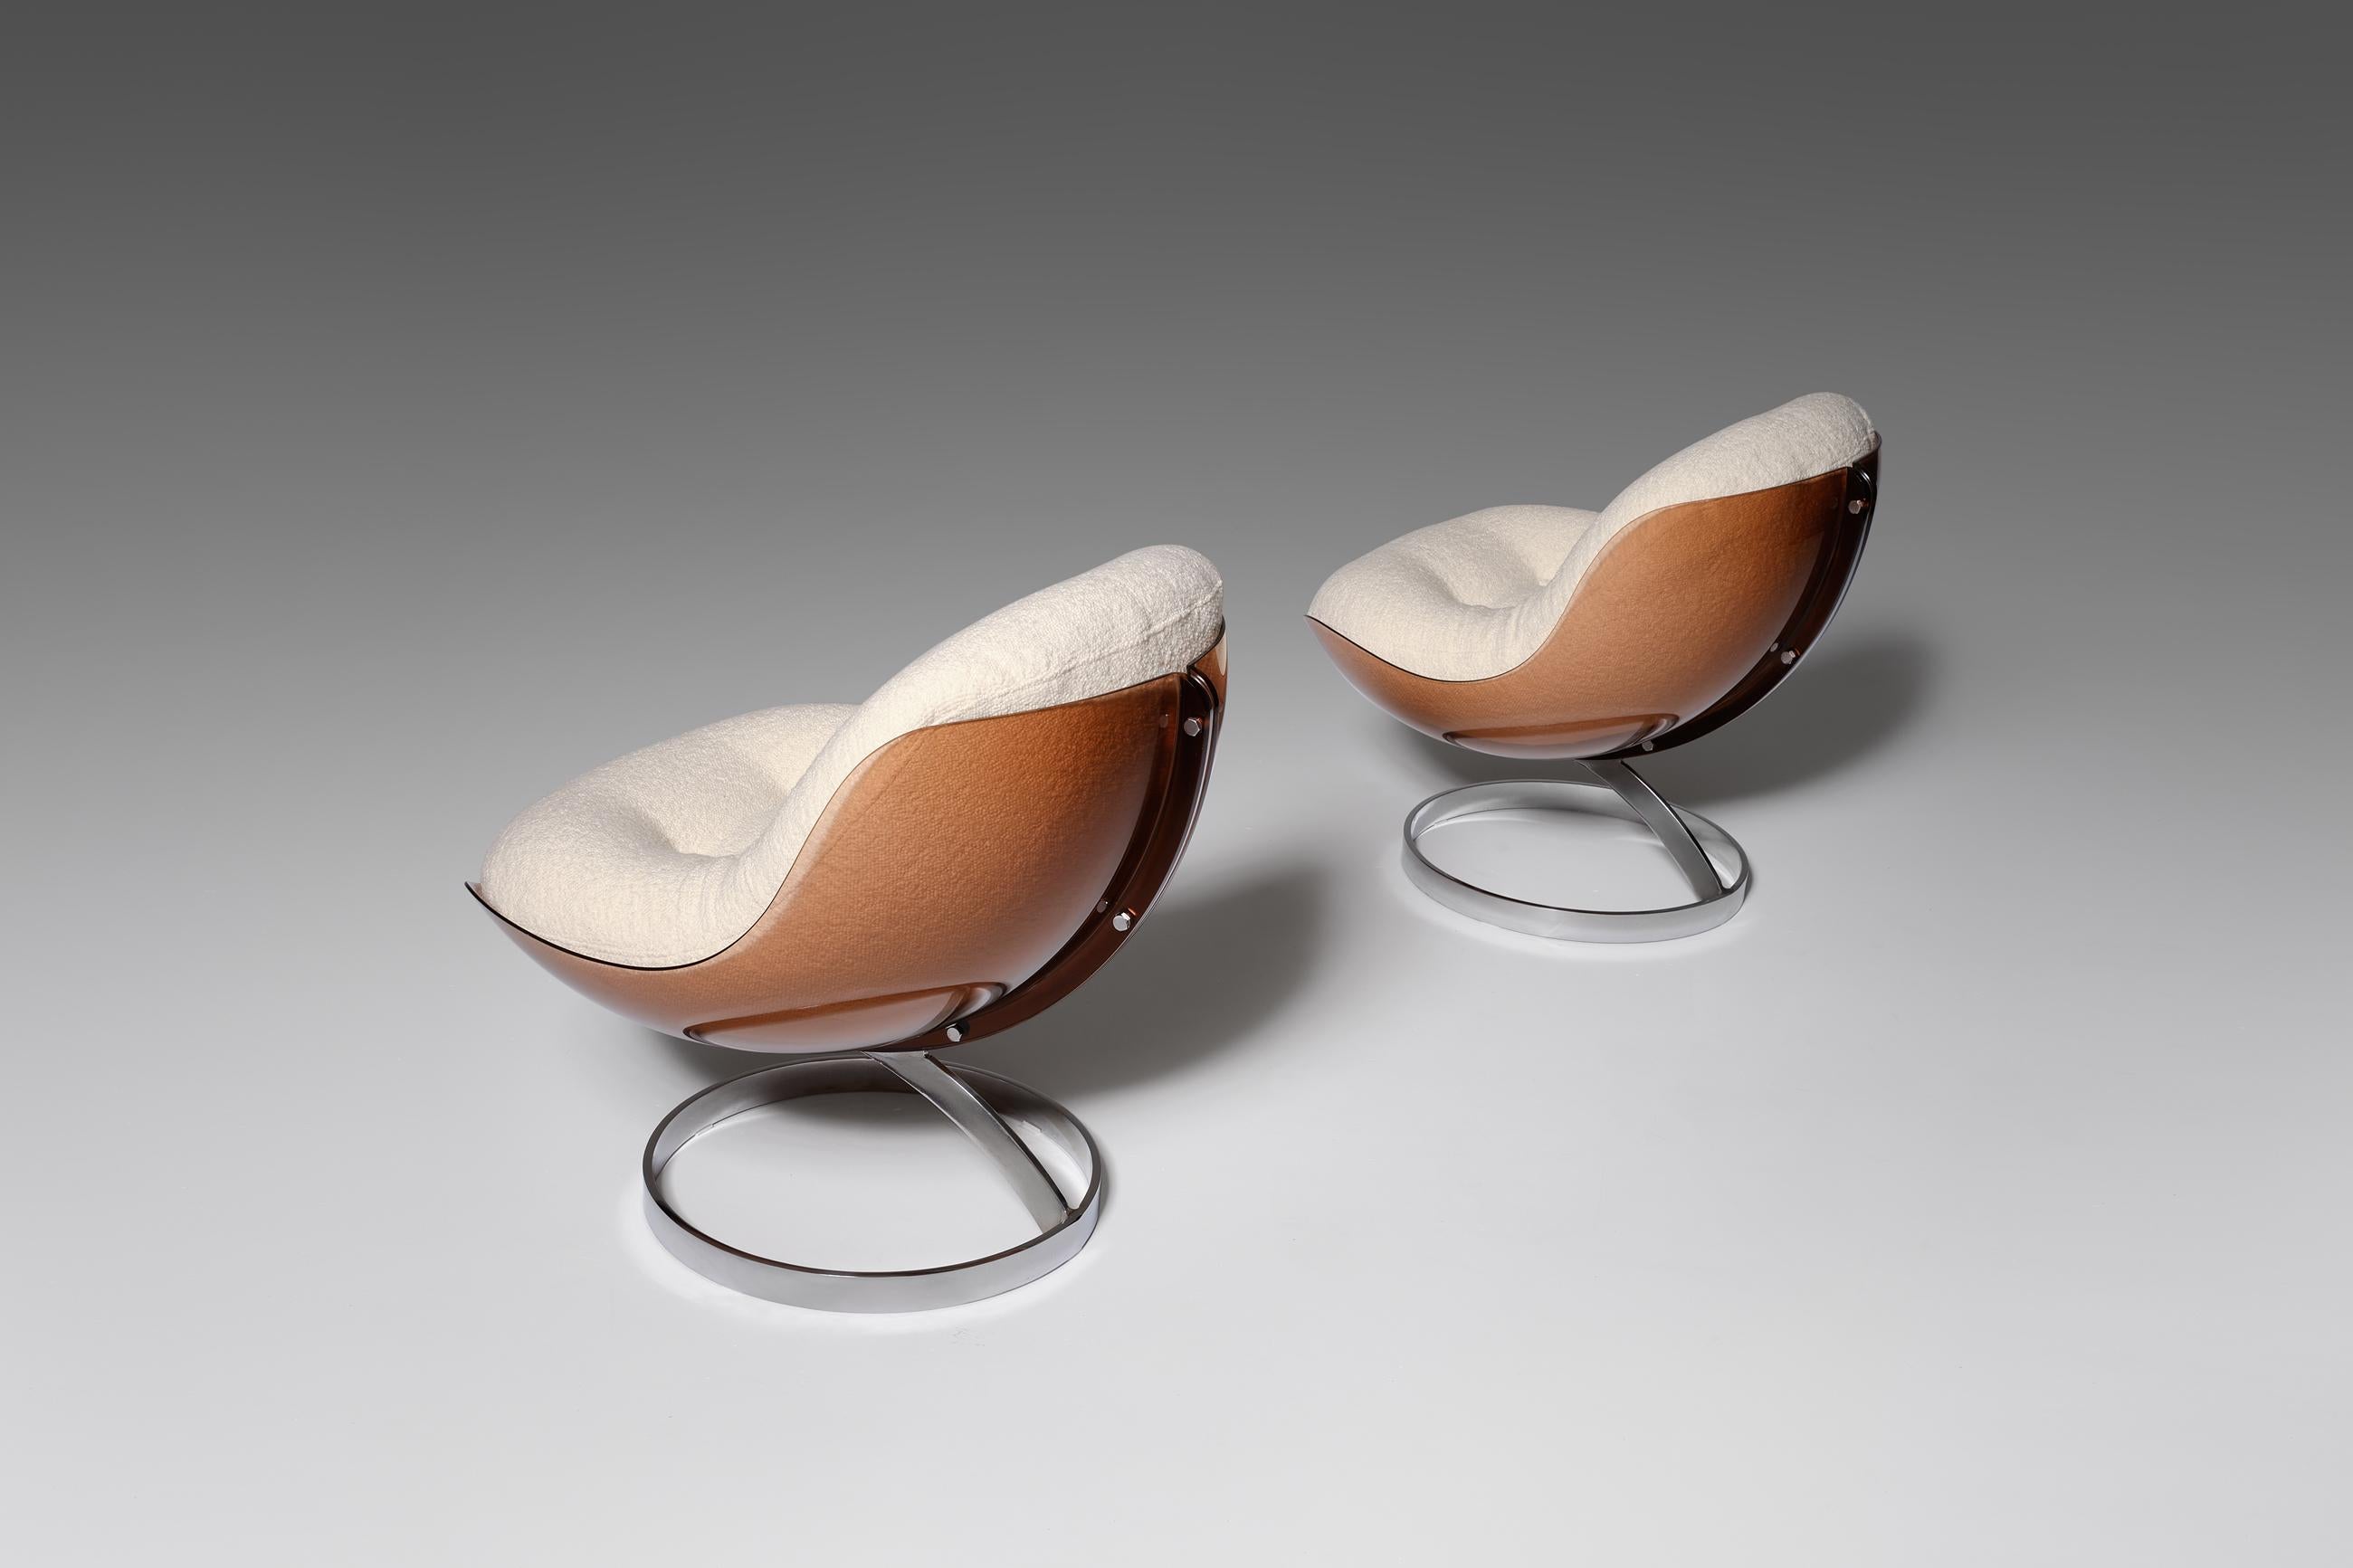 Chrome Boris Tabacoff ‘Sphere’ Chairs, France, 1971